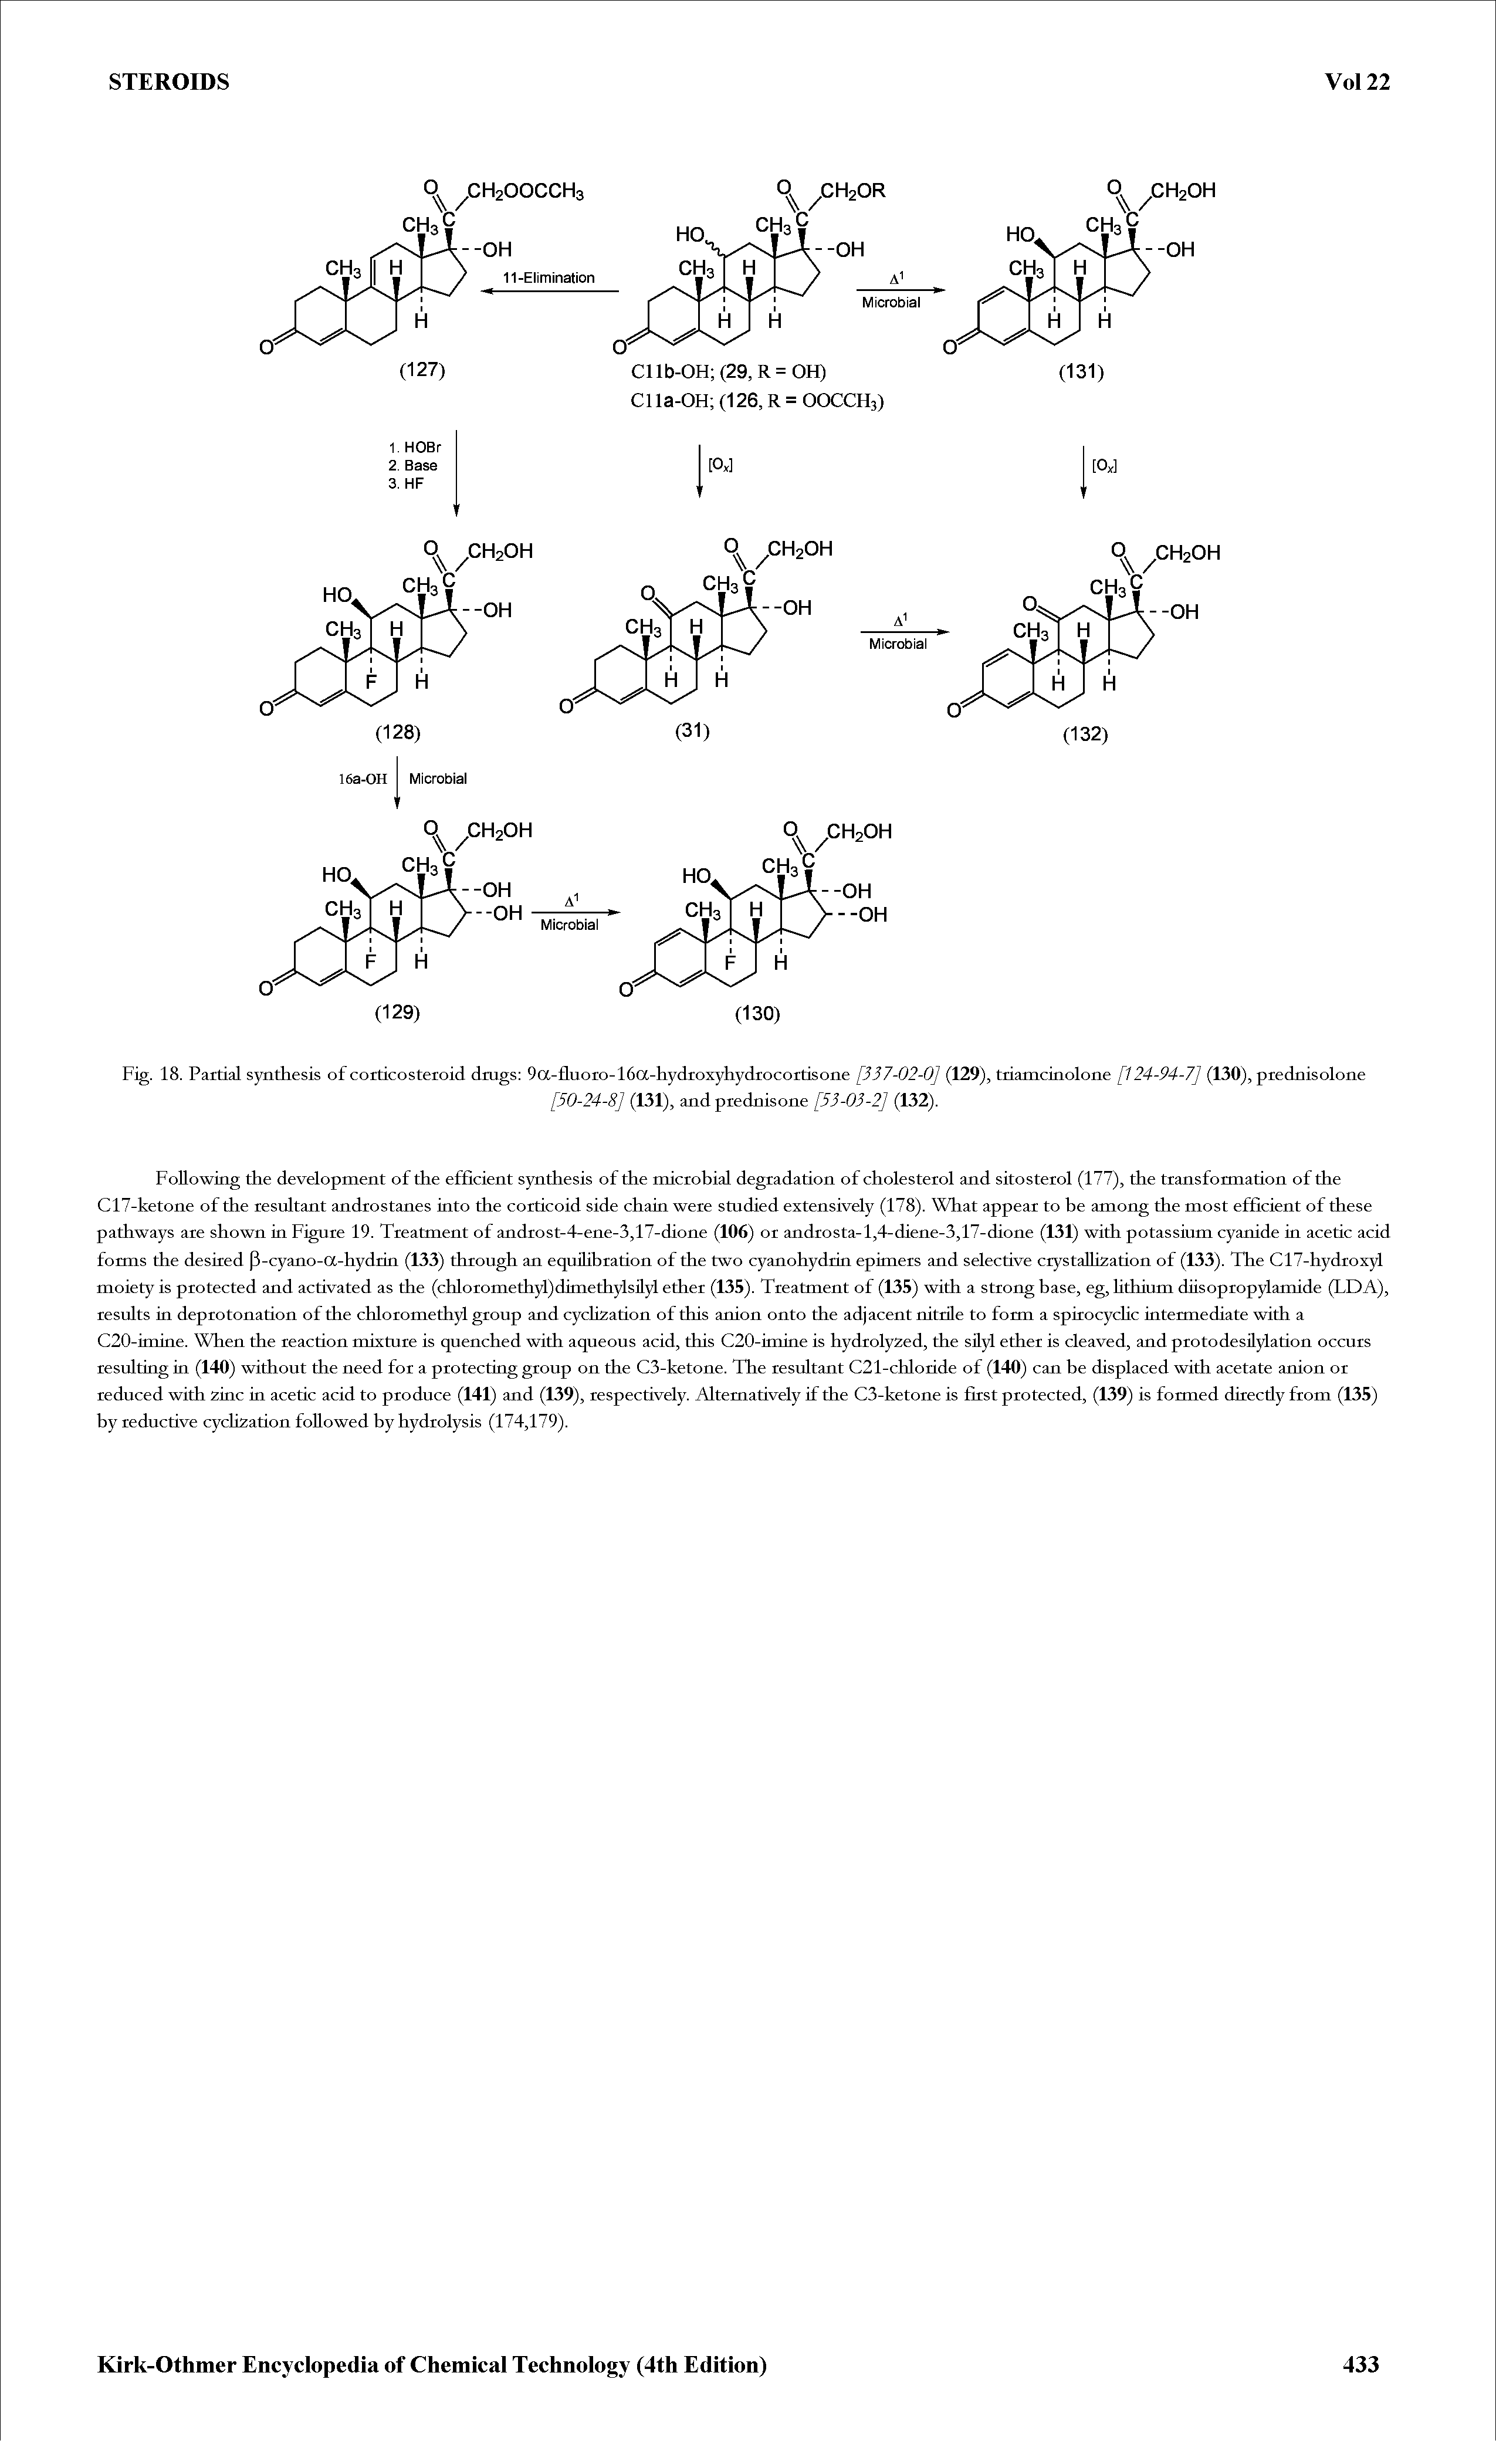 Fig. 18. Partial synthesis of corticosteroid drugs 9a- uoro-16a-hydroxyhydrocortisone [337-02-0] (129), triamcinolone [124-94-7] (130), prednisolone...